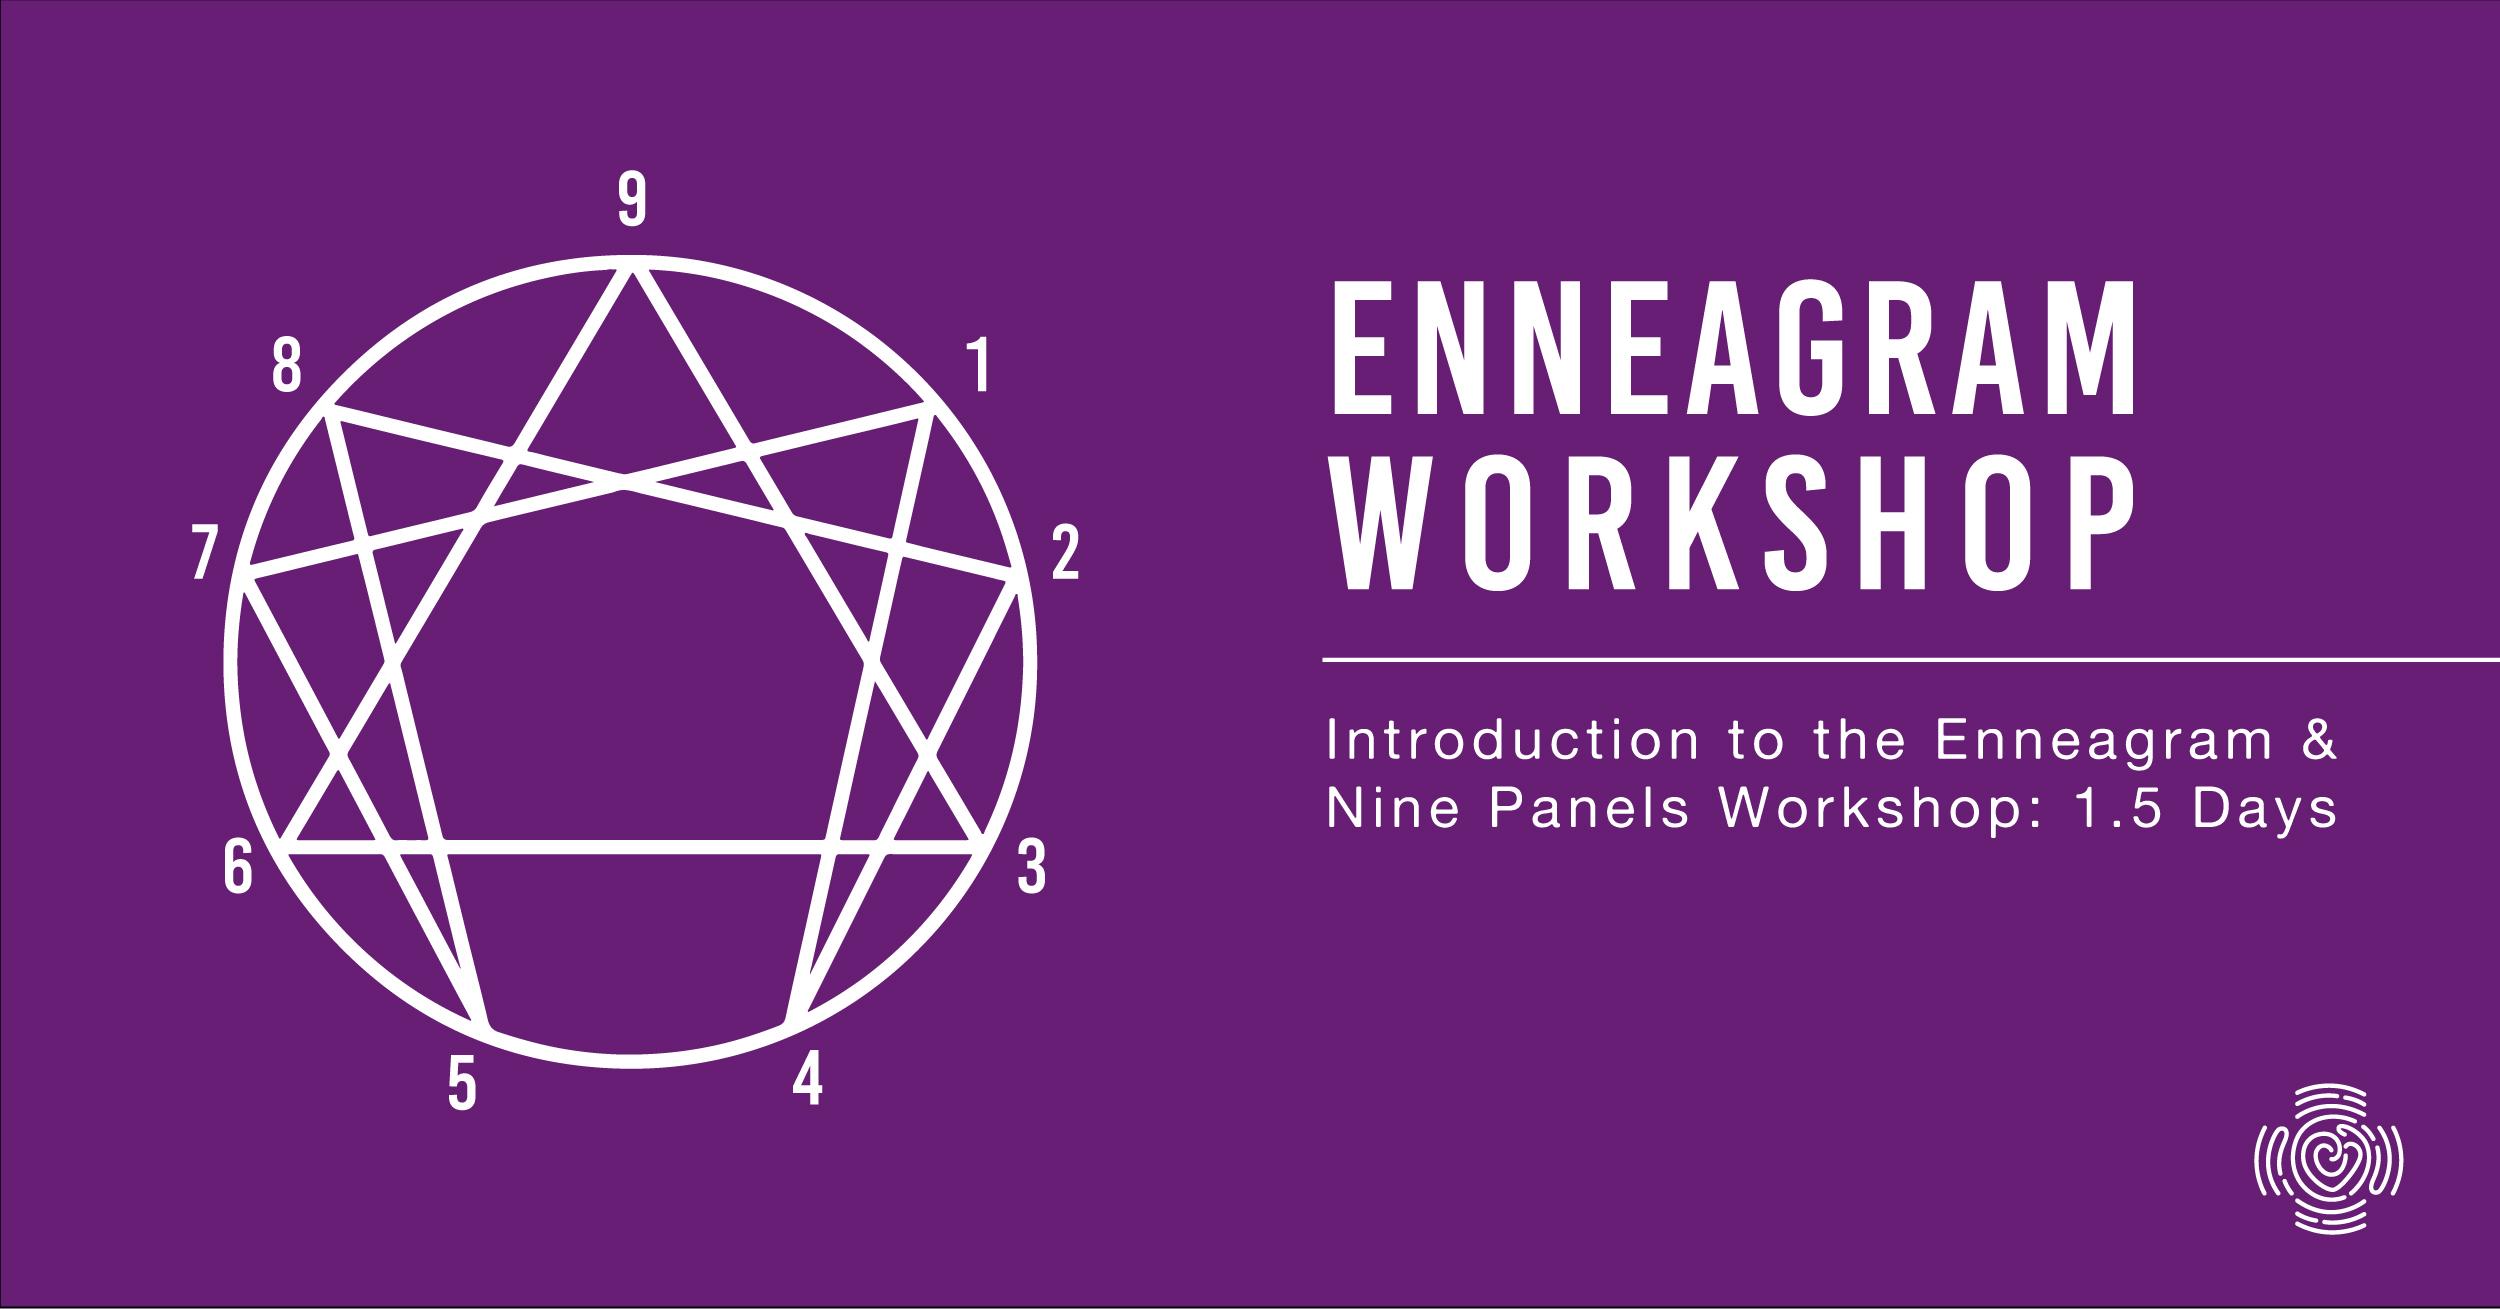 Introduction to the Enneagram & Nine Panels Workshop: 1.5 Days